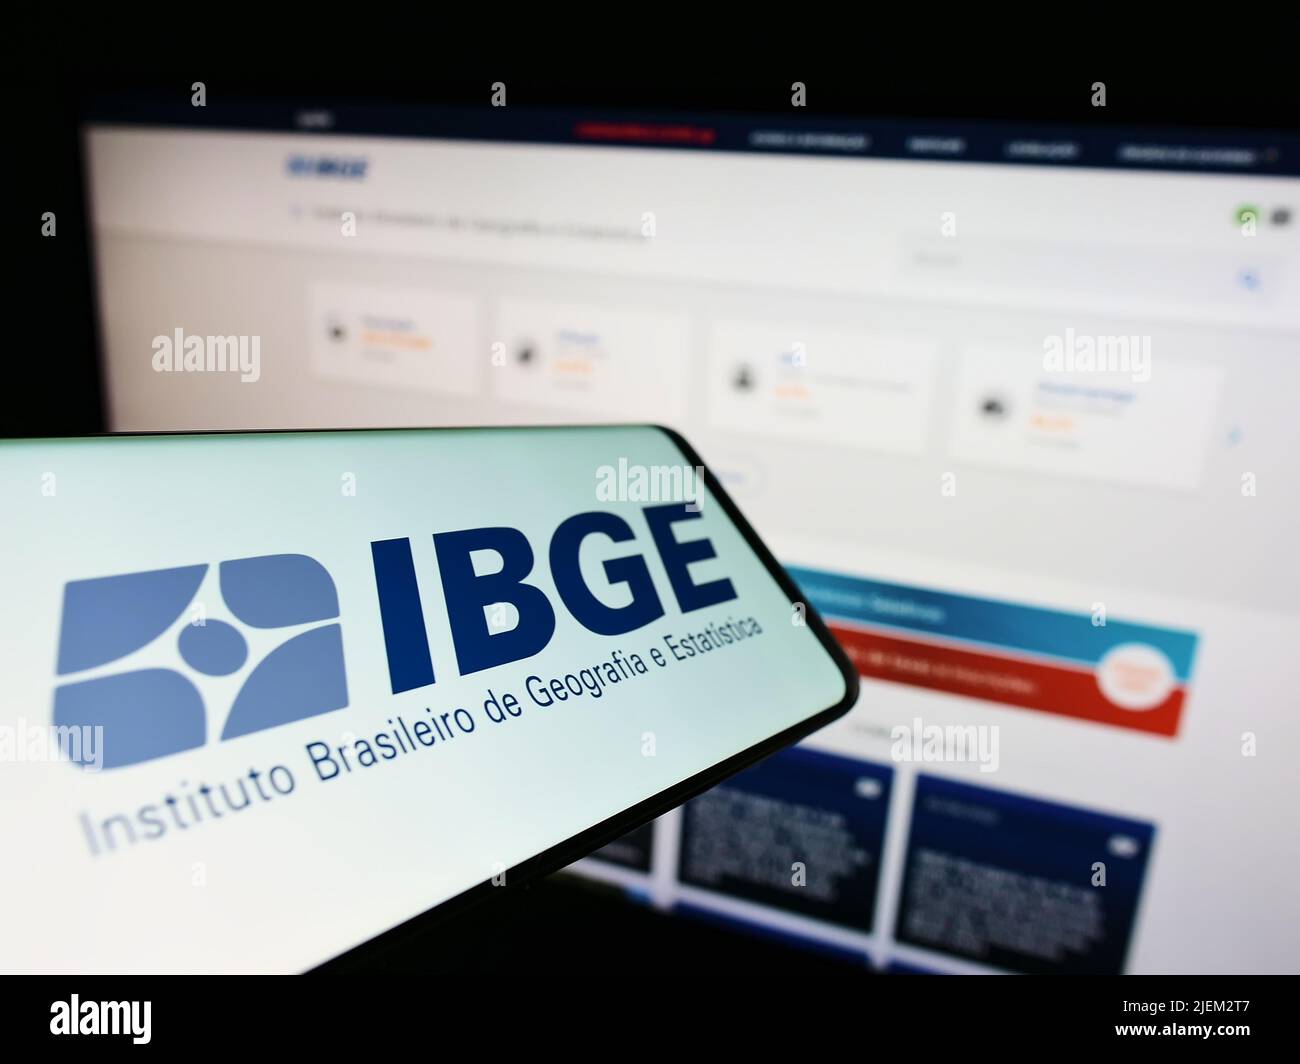 Celular con logo del Instituto Brasileiro de Geografia e Estatitica (IBGE) en pantalla con sitio web. Enfoque en la parte central derecha de la pantalla del teléfono. Foto de stock